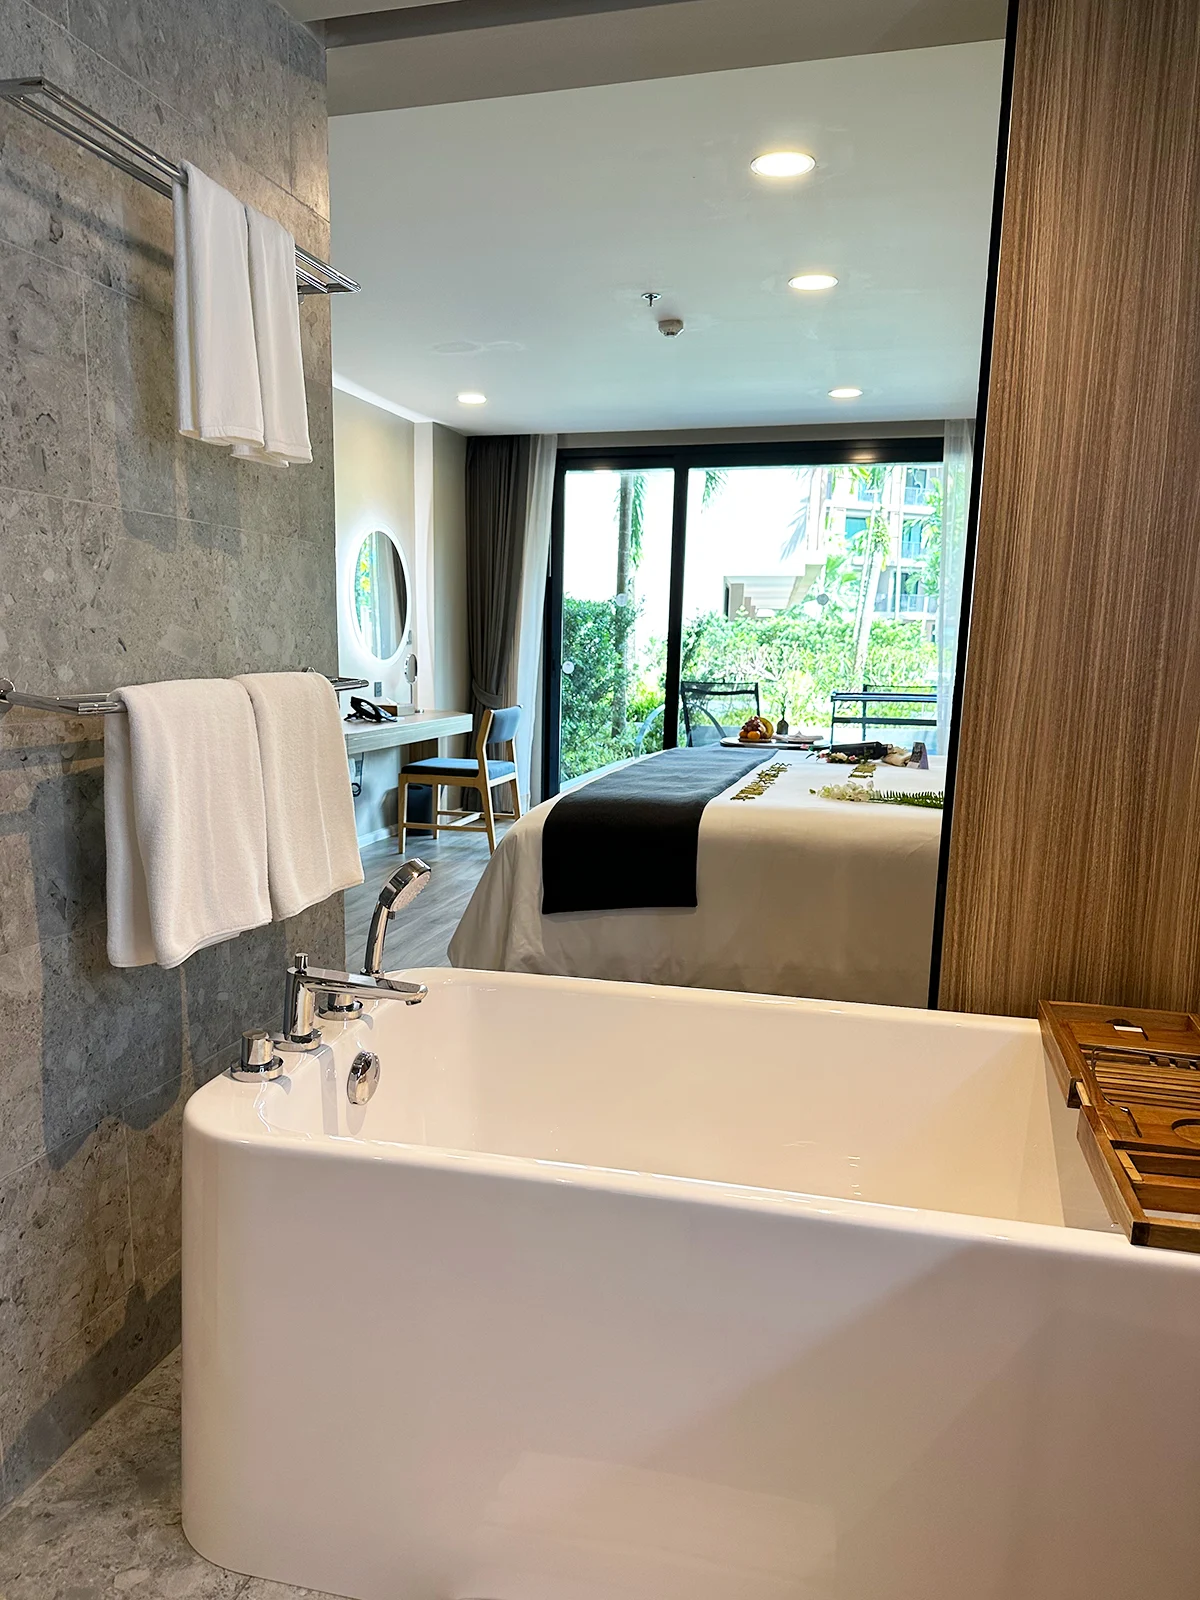 khao lak phang nga hotel view of bathtub and hotel bed